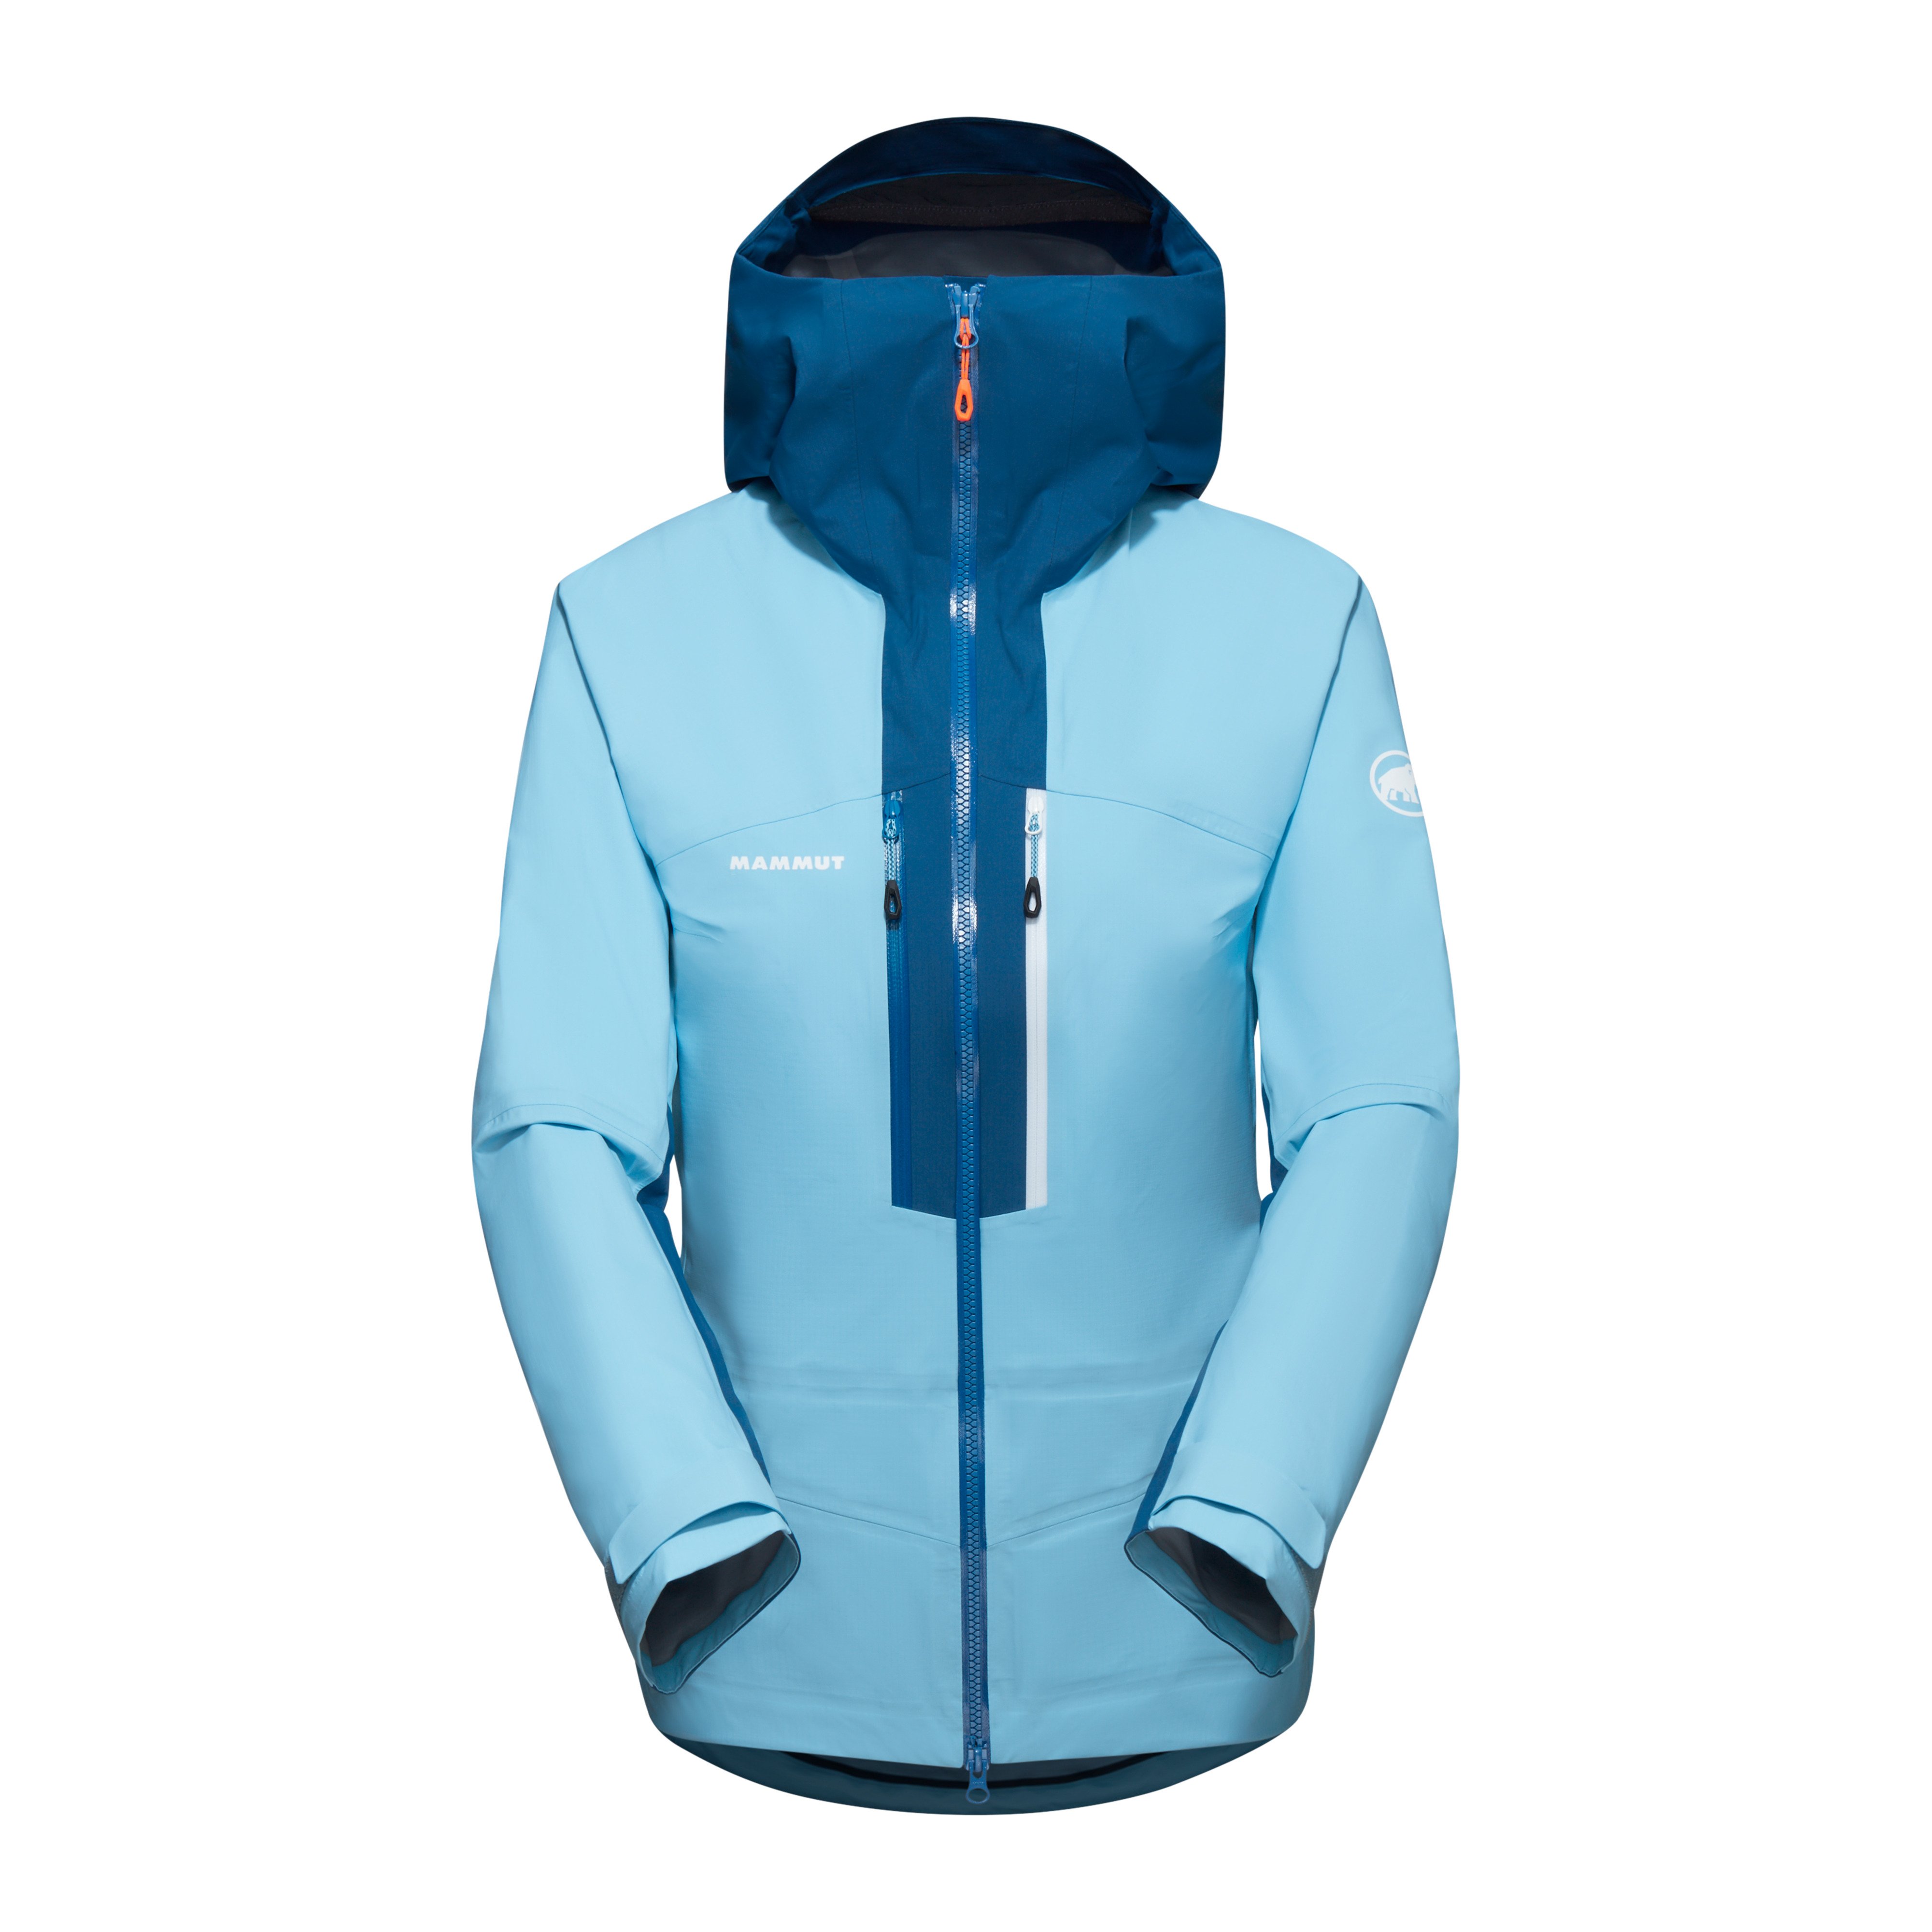 Taiss HS Hooded Jacket Women - cool blue-deep ice, XL thumbnail